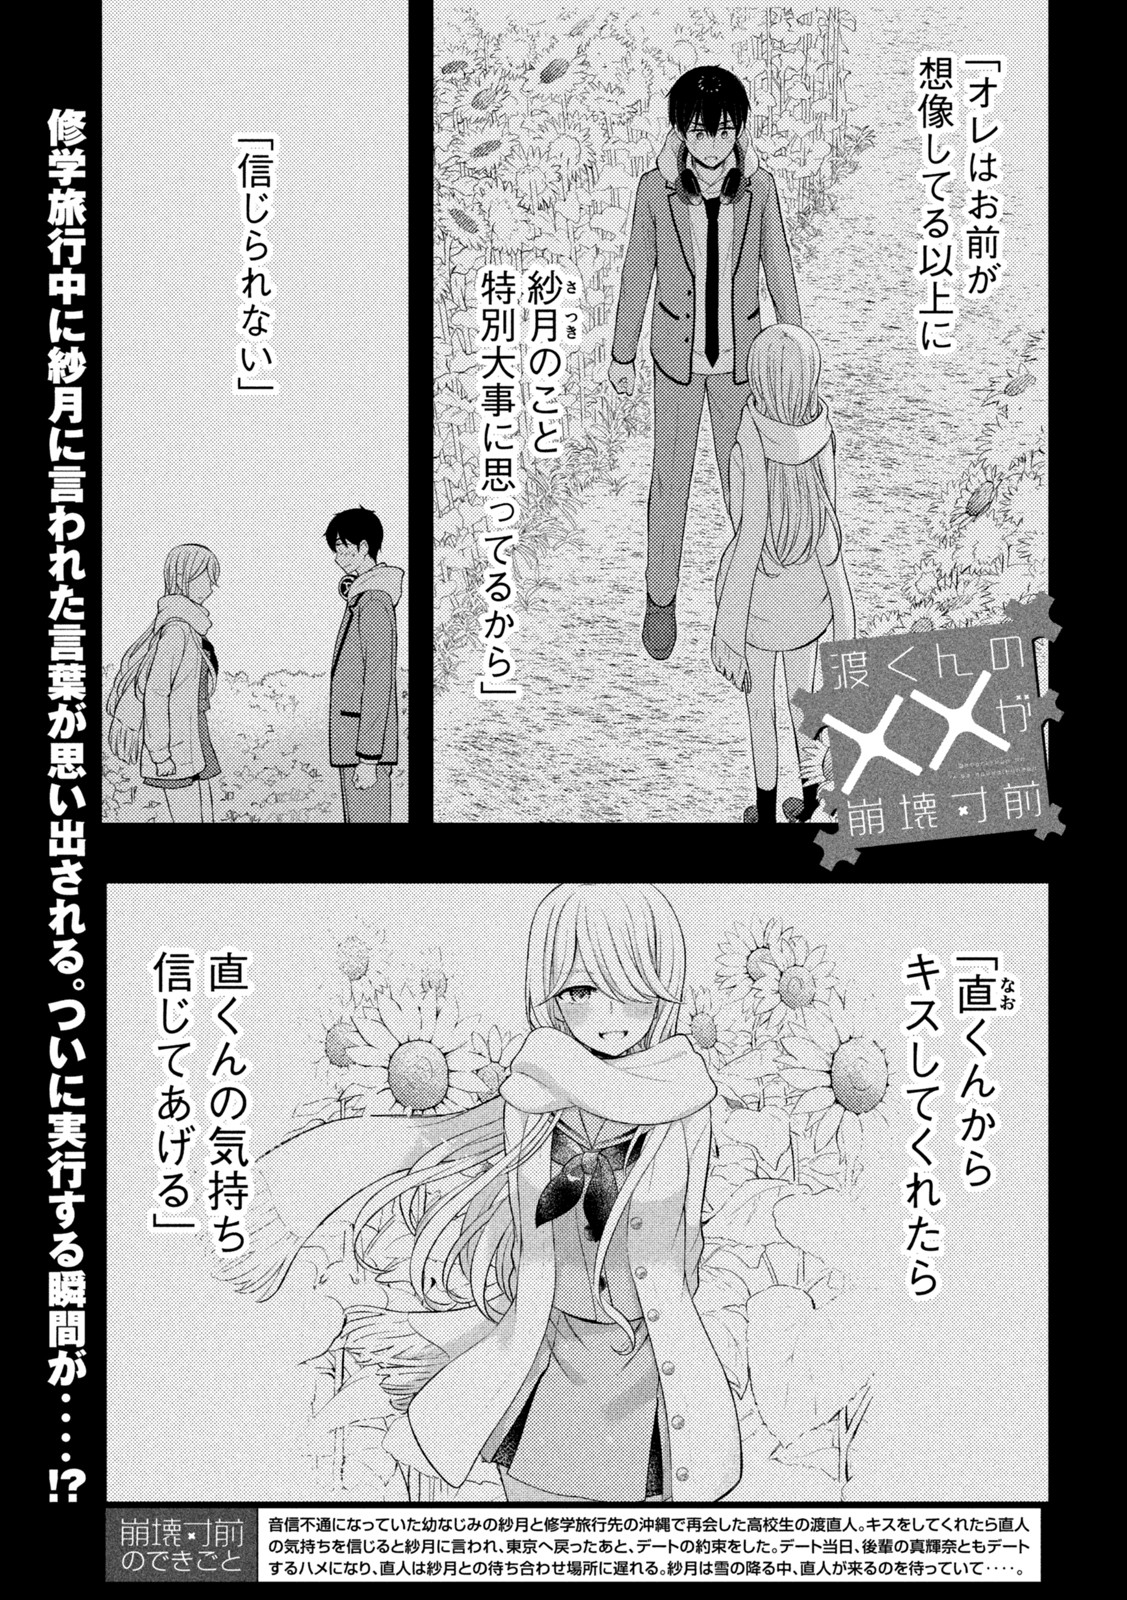 Watari-kun no xx ga Houkai Sunzen - Chapter 75 - Page 1